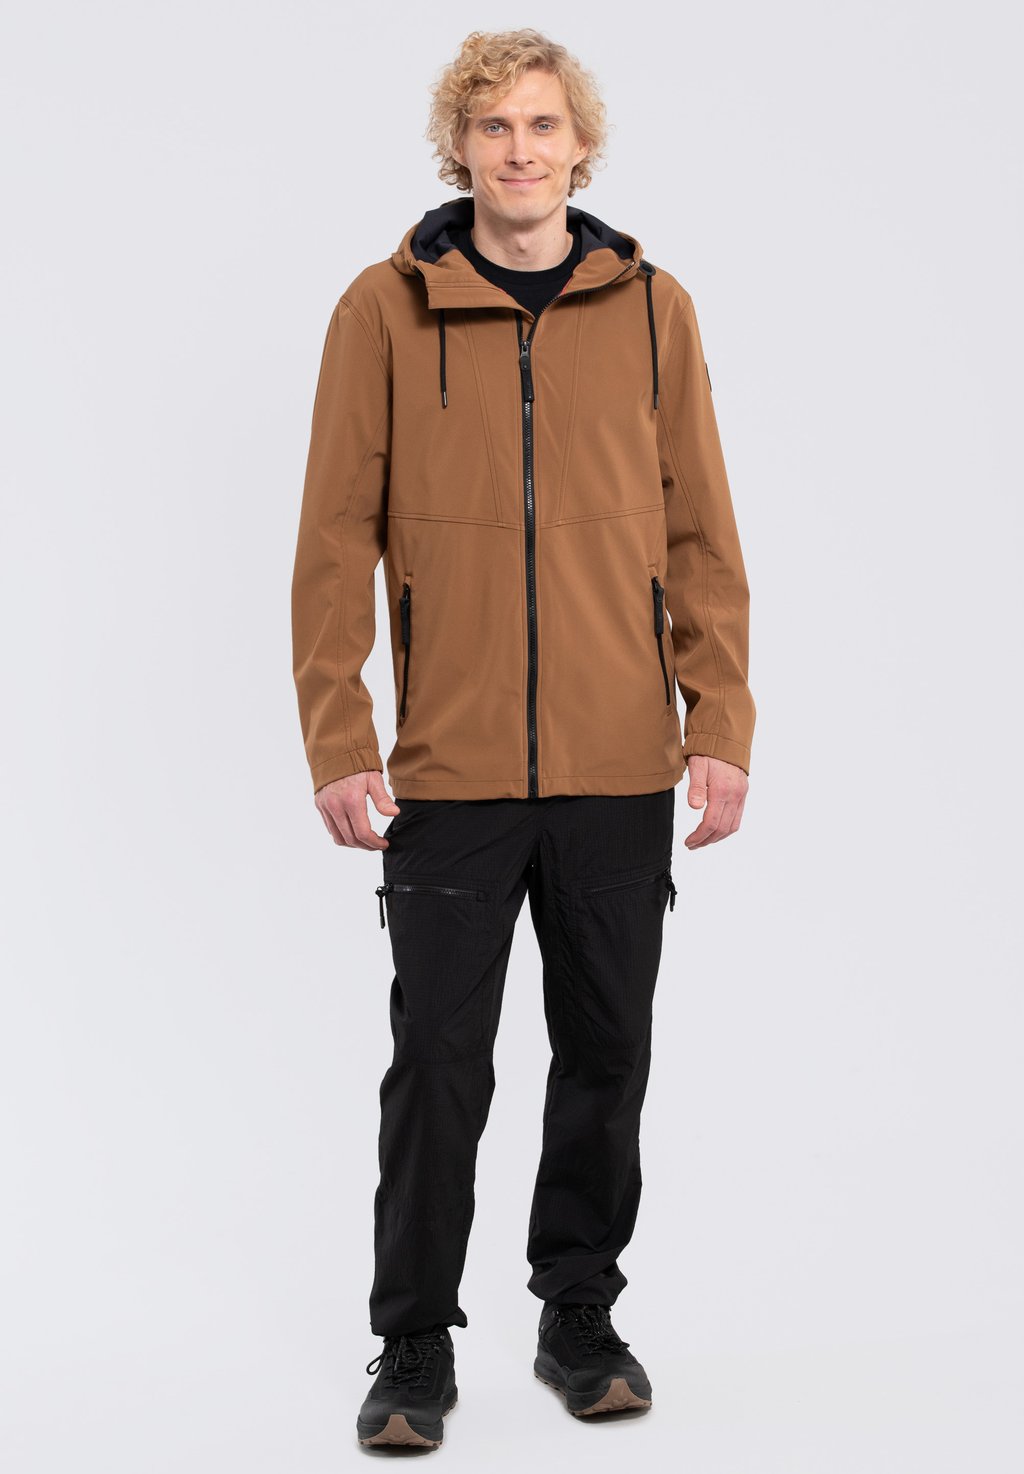 Куртка Softshell ADRIAT Icepeak, темно коричневый куртка утепленная мужская icepeak parkdale коричневый